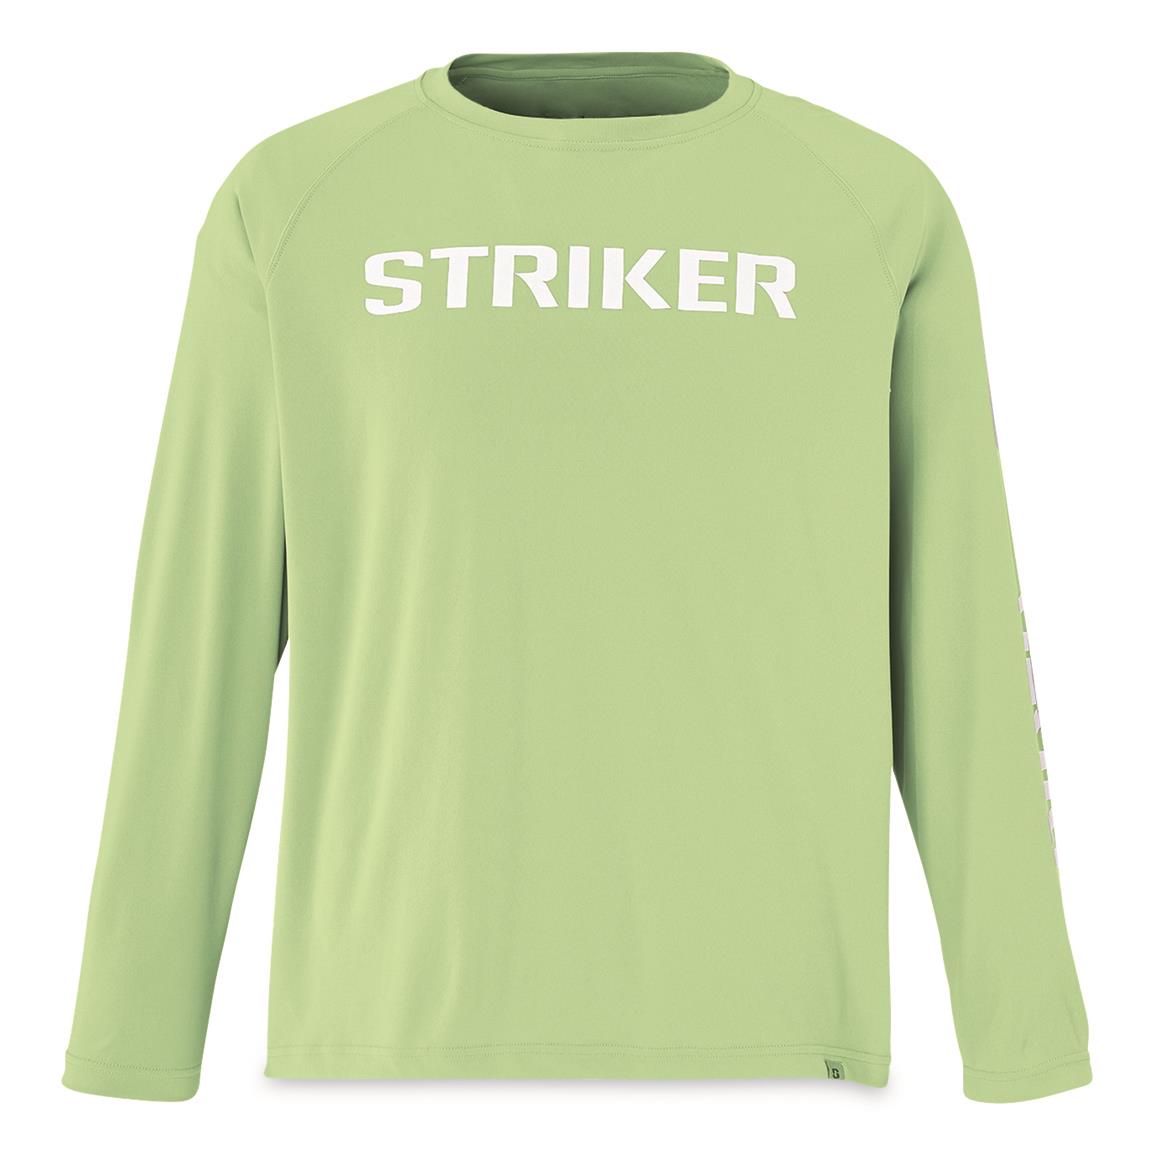 Striker Men's Swagger UPF Long Sleeve Shirt, Mean Green